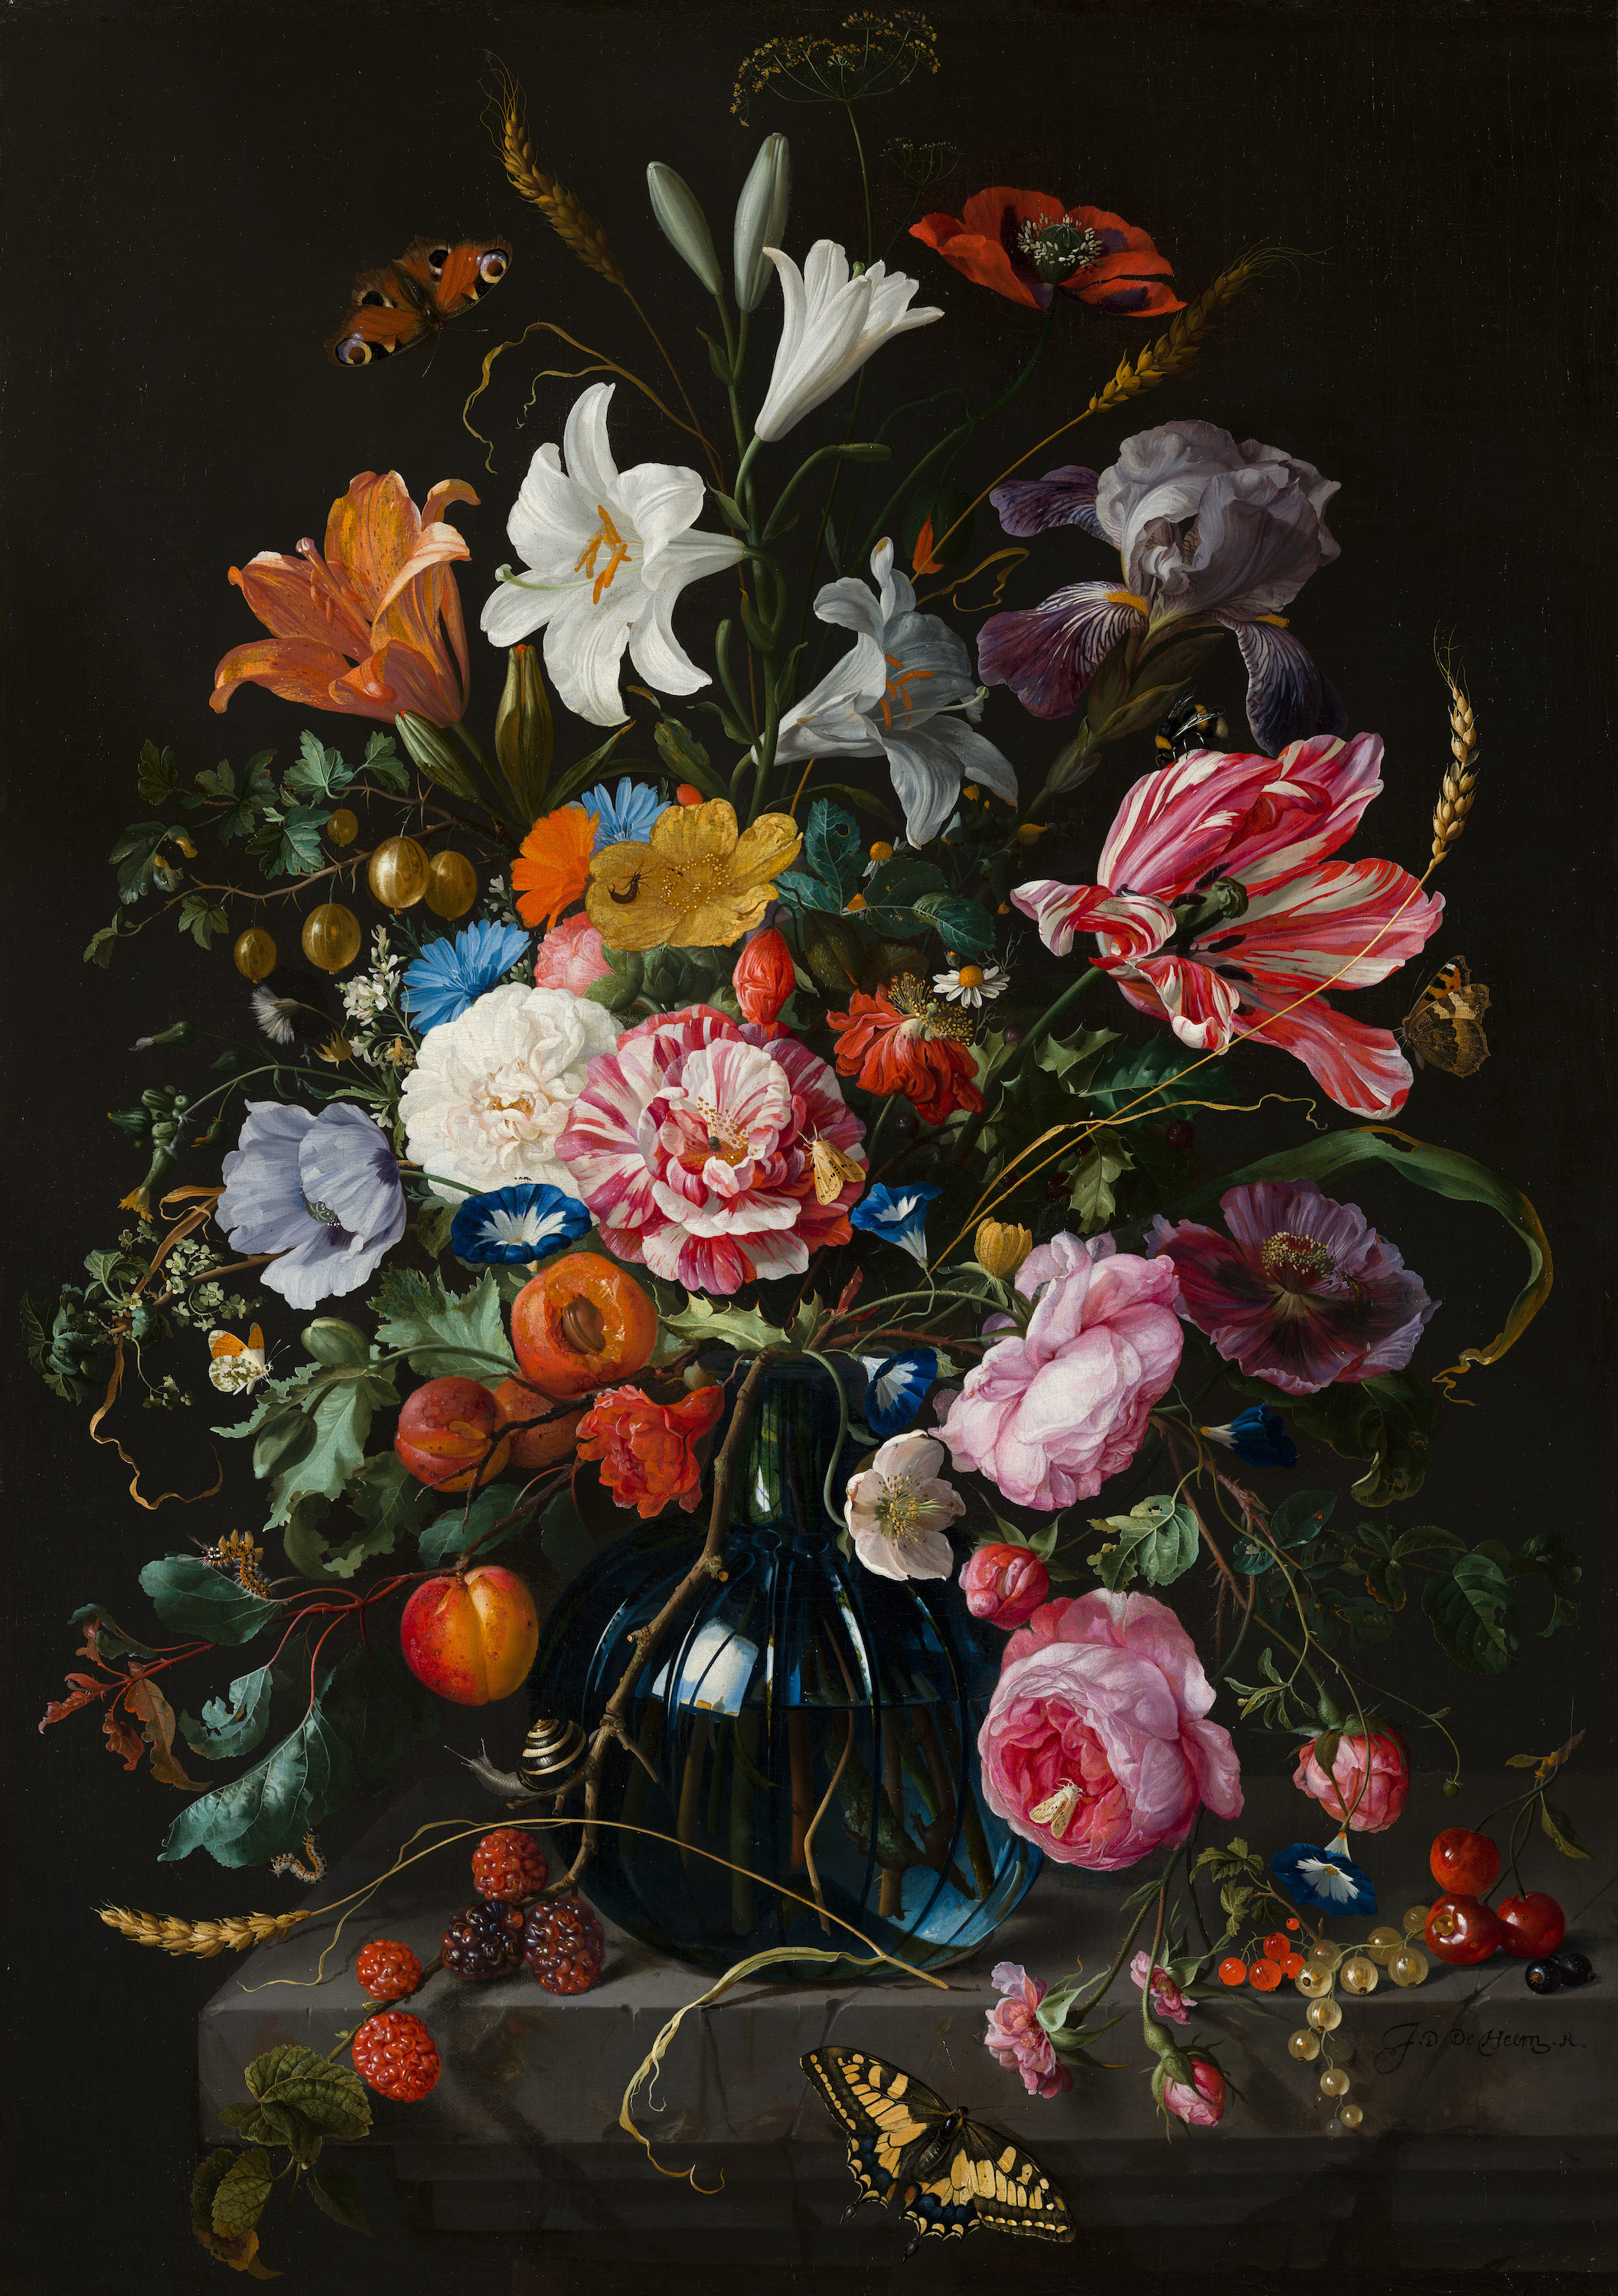 花瓶の花 by Jan Davidsz de Heem - 1670年 - 52.6 x 74.2 cm 